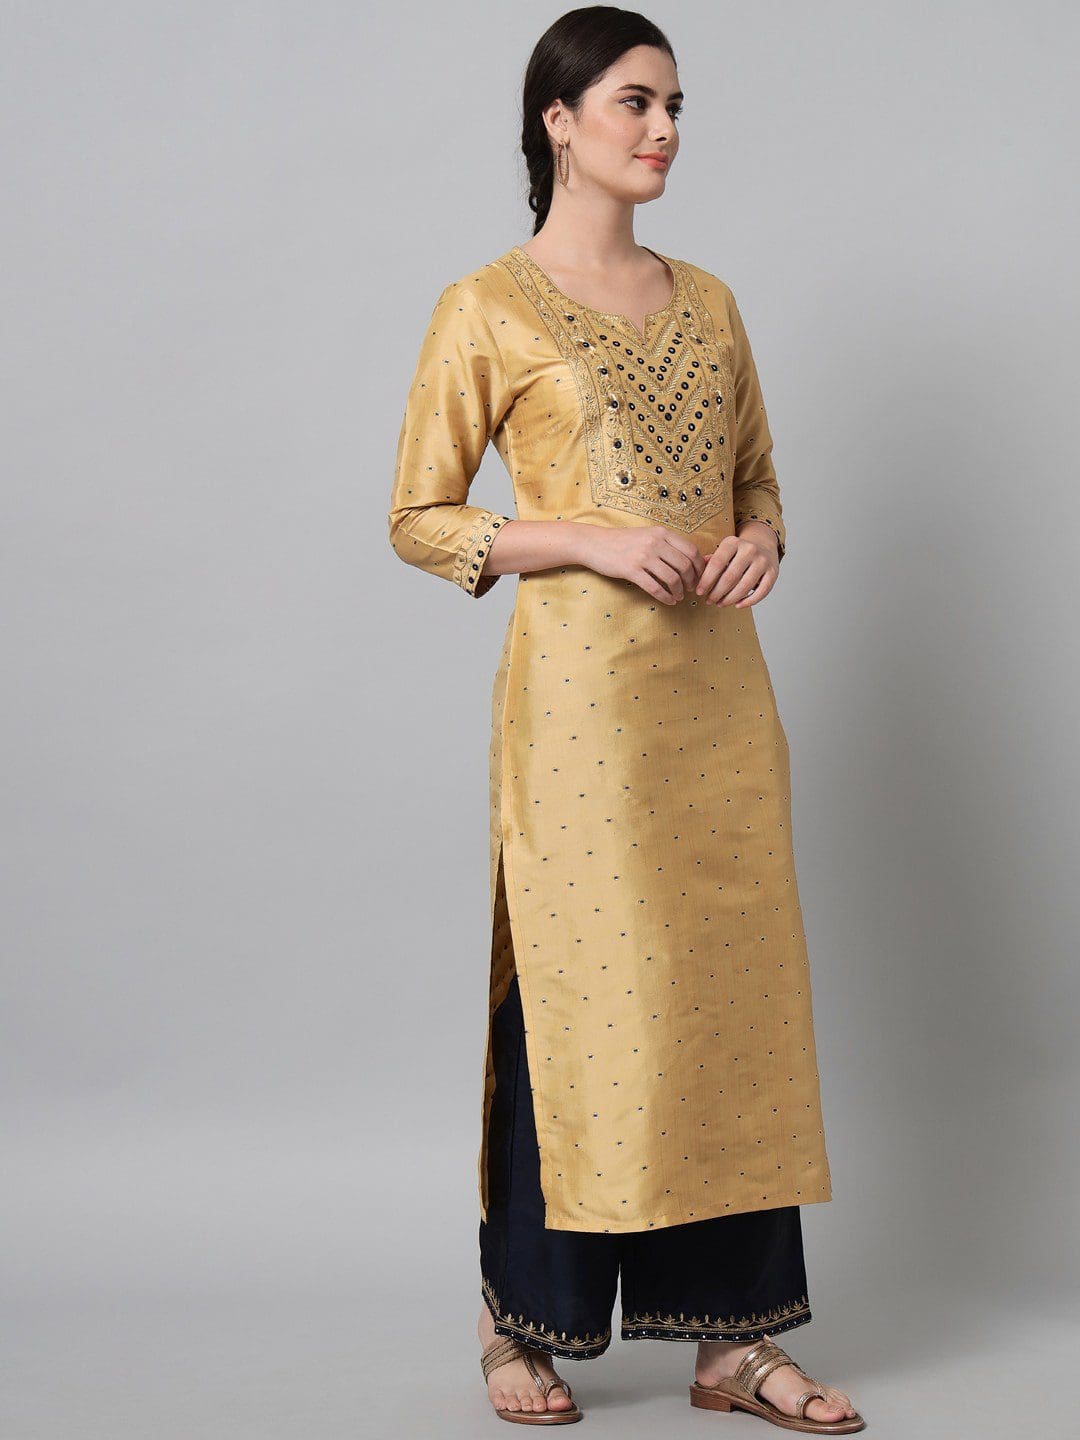 Embroidery Rayon Fabric Color Golden Beige Zari And Black Straight Kurta Trouser Set